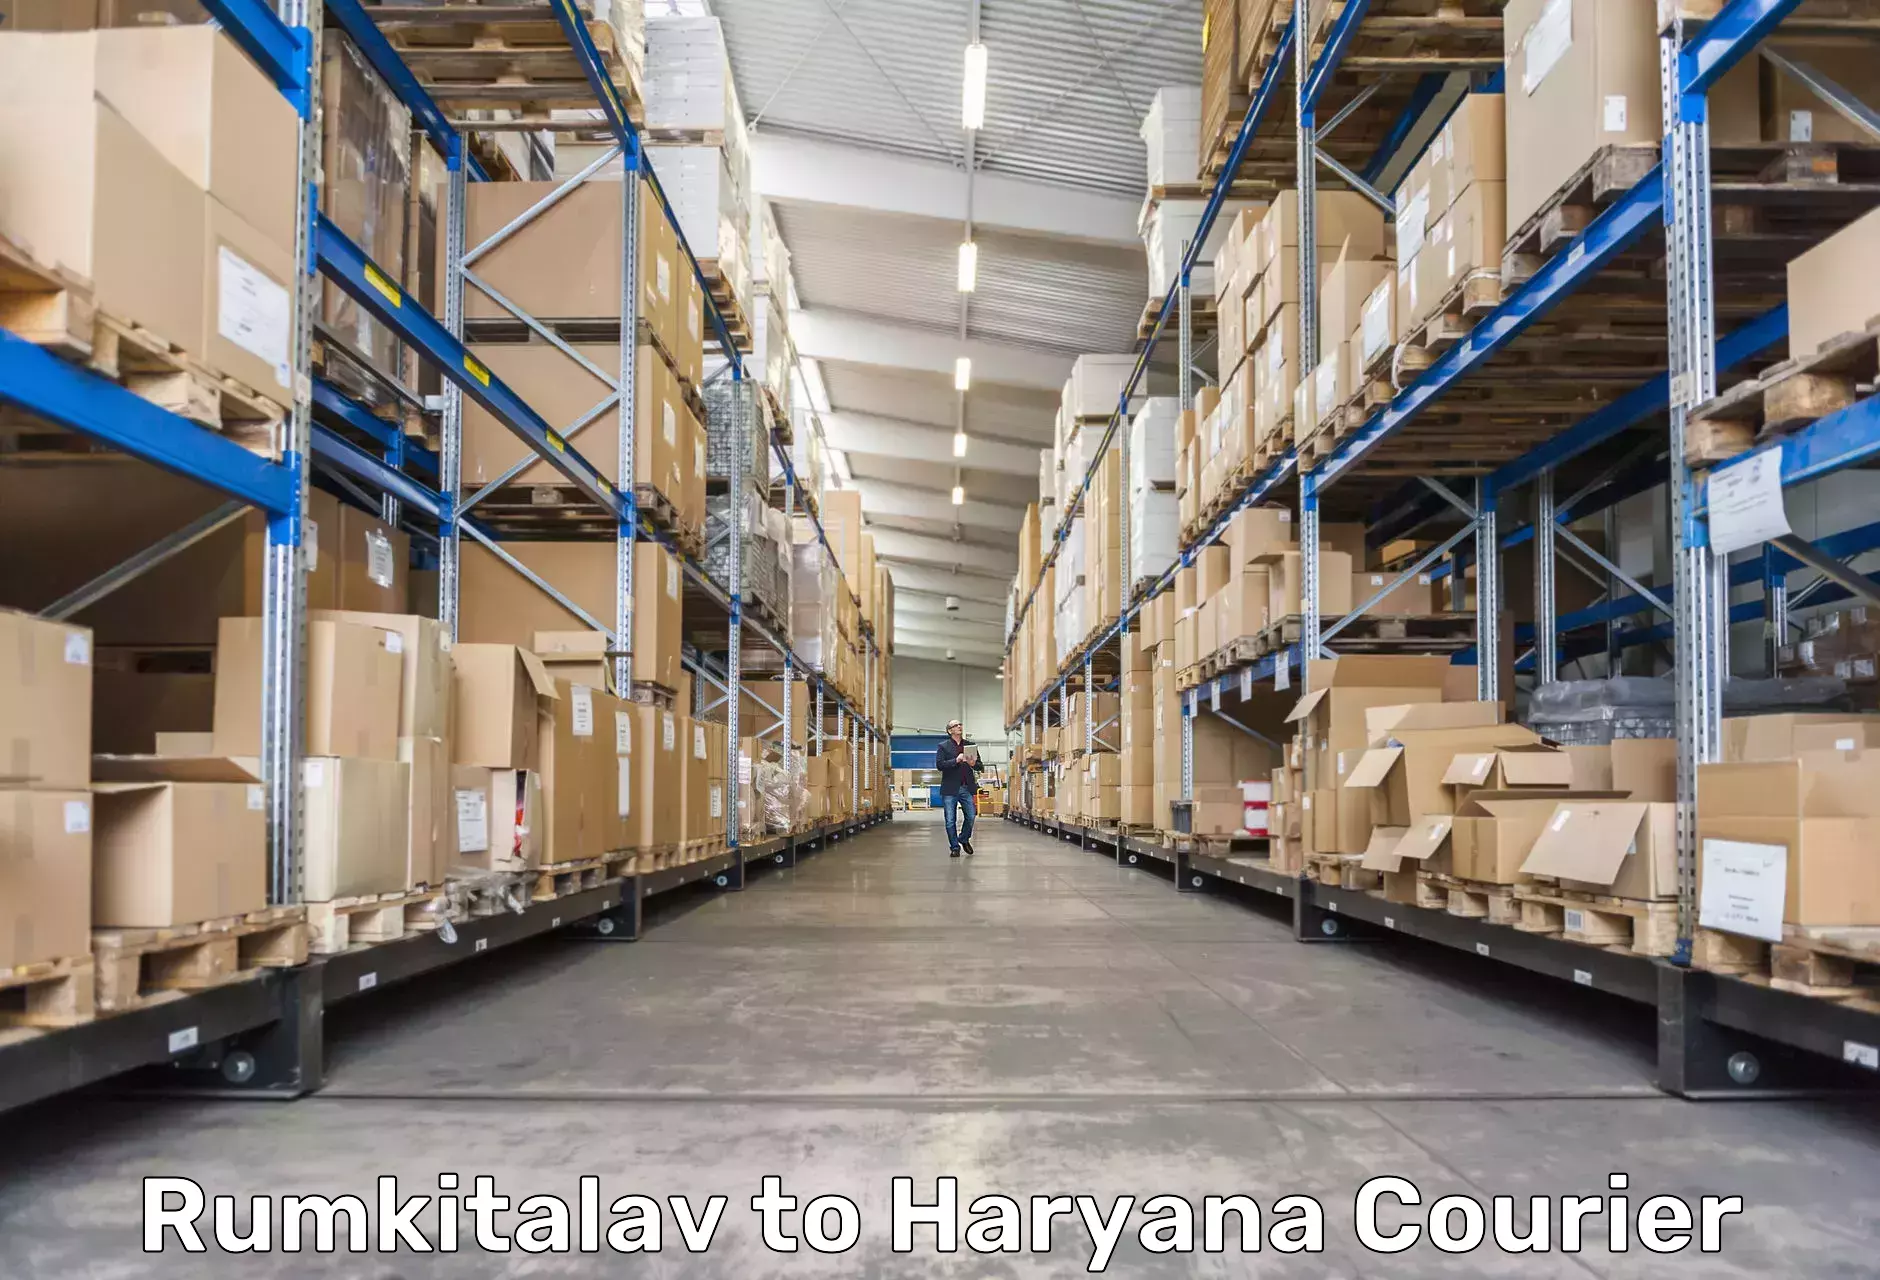 Full-service courier options Rumkitalav to Haryana